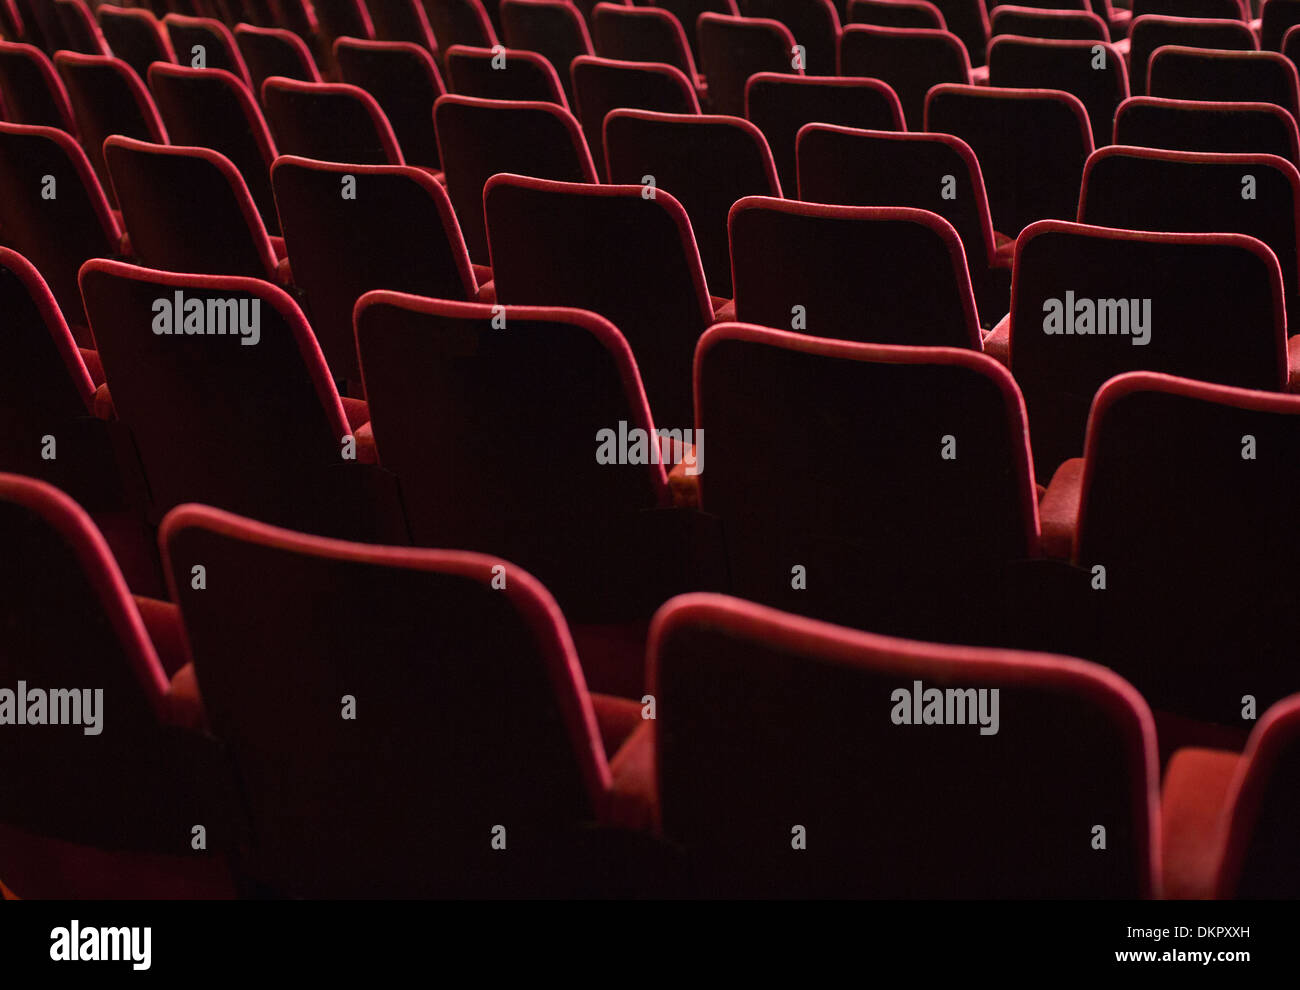 Posti a sedere nel teatro vuoto auditorium Foto Stock